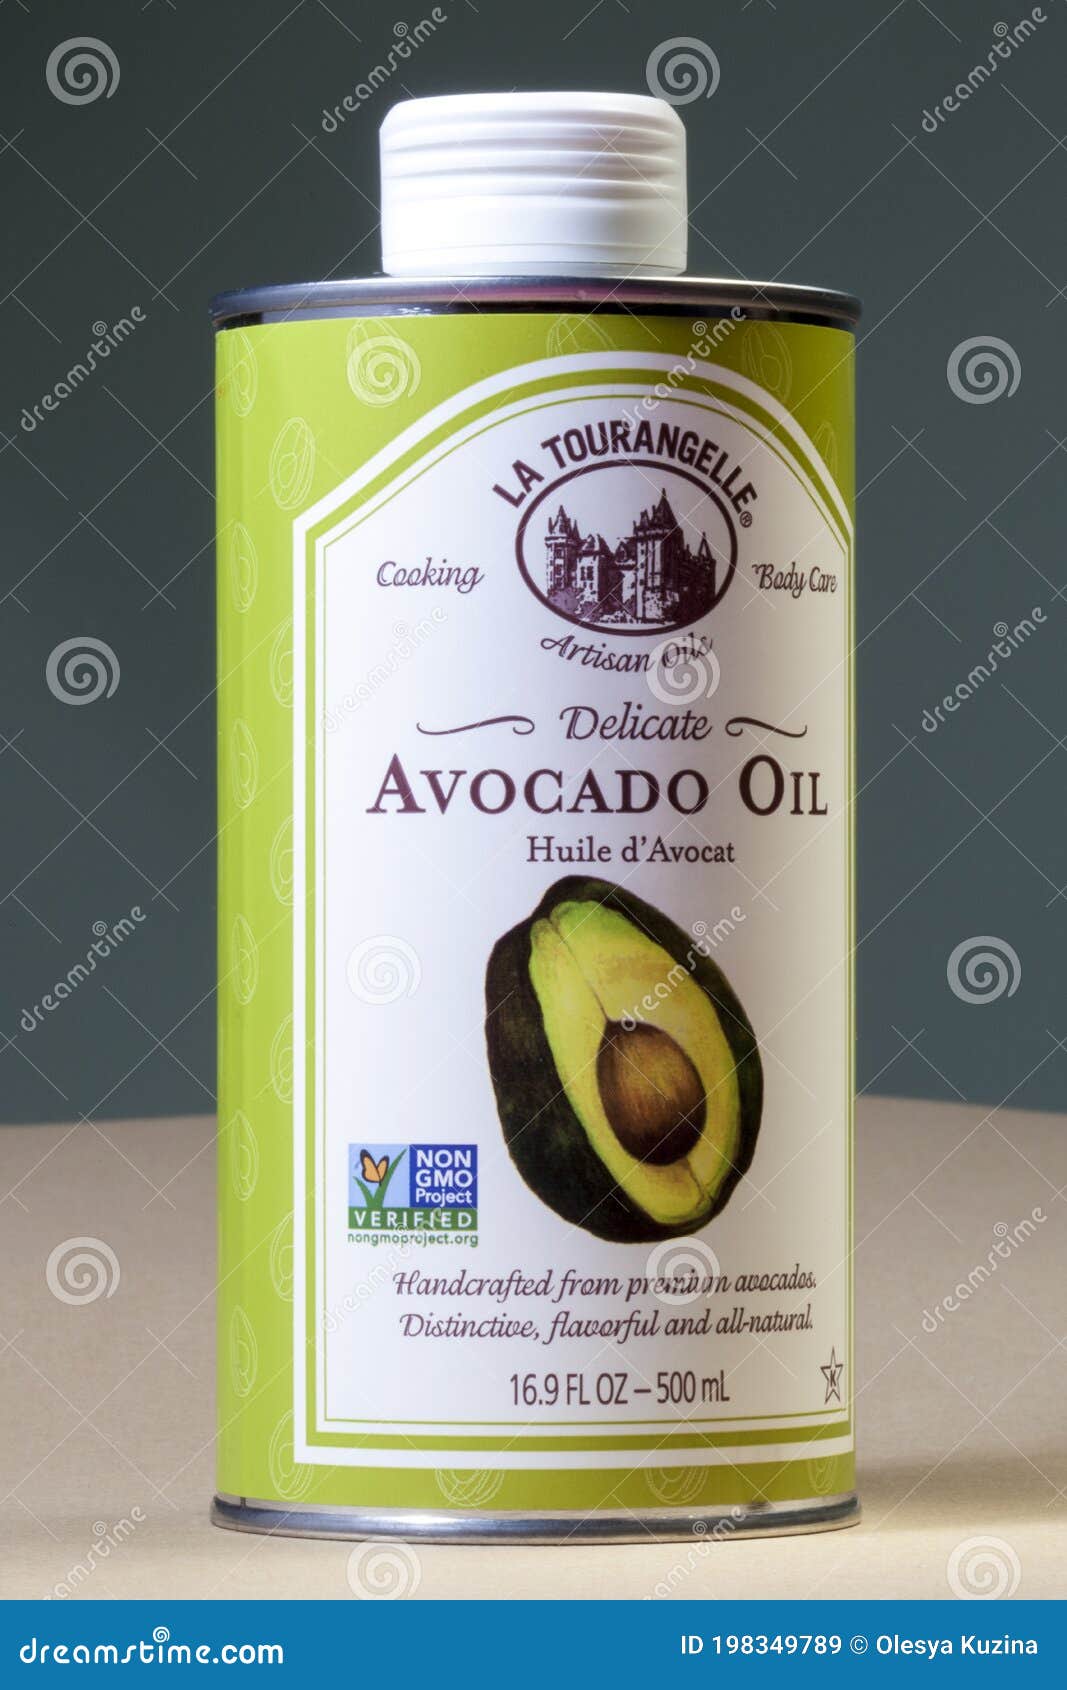 La Tourangelle Oil Avocado 16.9 FO (Pack Of 6), Case of 6 - 16.9 FO each -  Food 4 Less